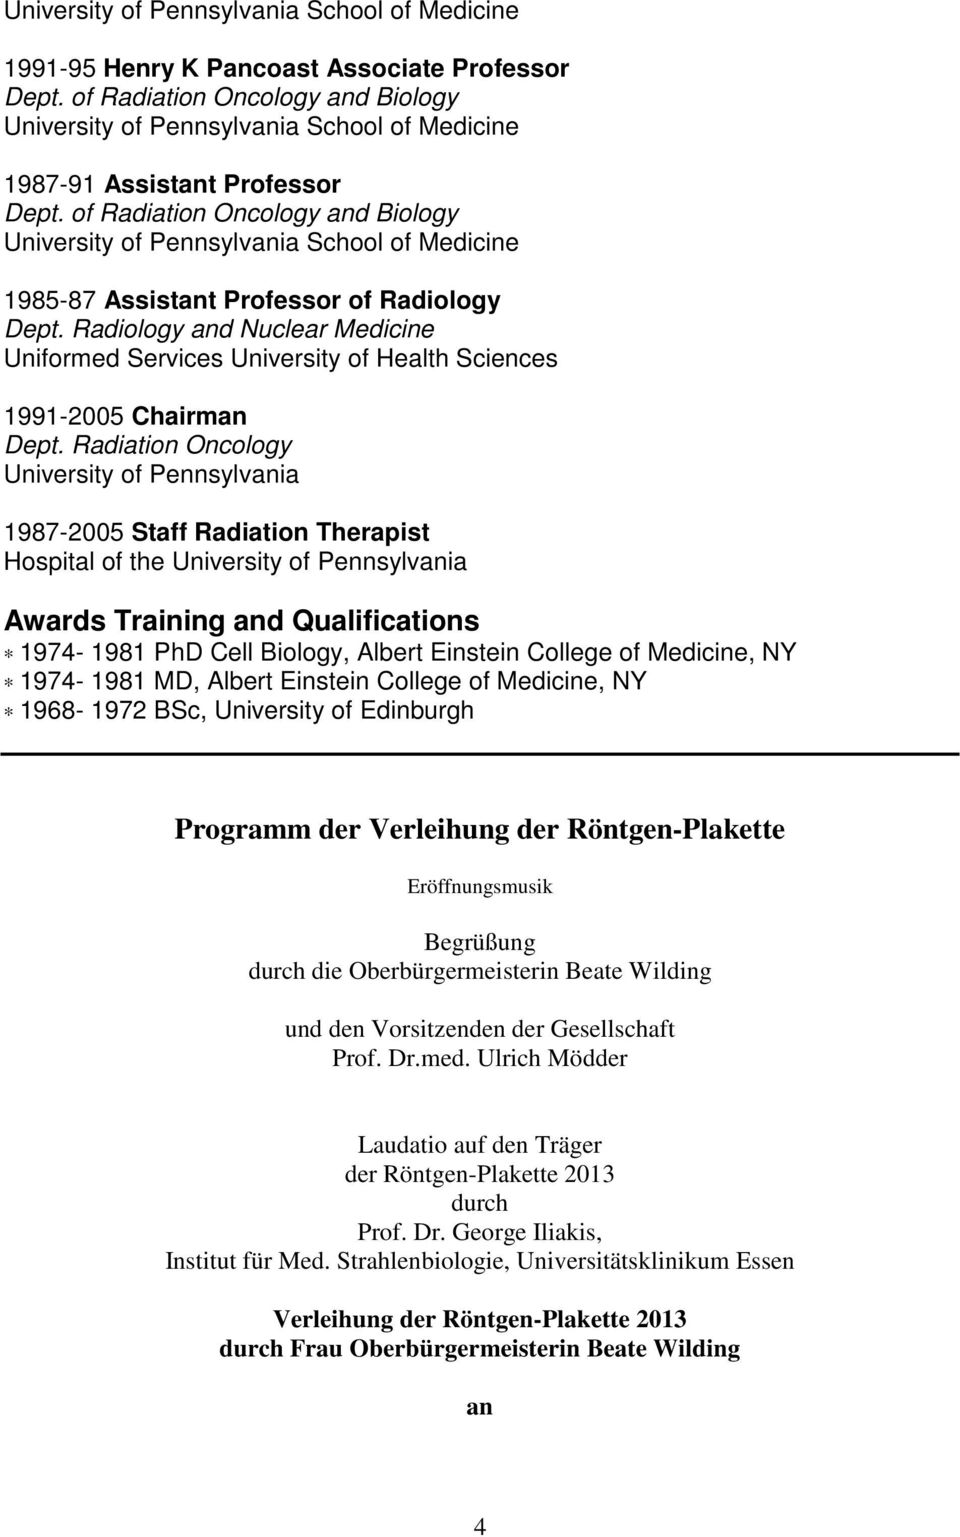 Radiation Oncology University of Pennsylvania 1987-2005 Staff Radiation Therapist Hospital of the University of Pennsylvania Awards Training and Qualifications 1974-1981 PhD Cell Biology, Albert